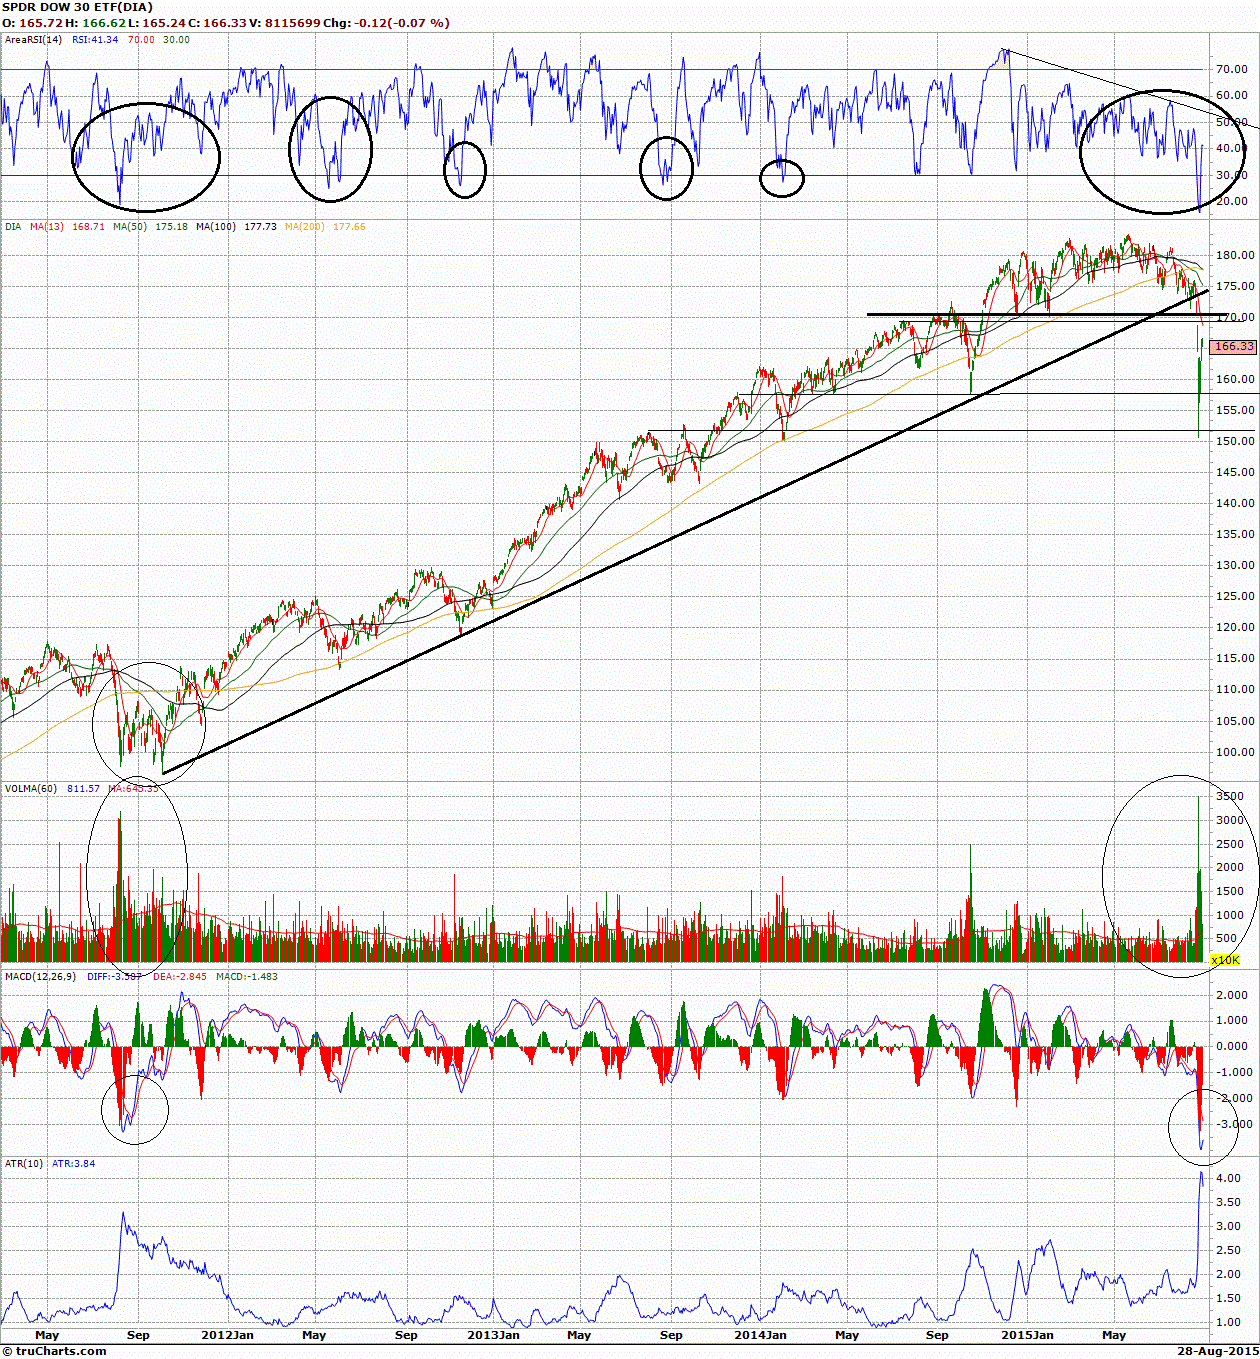 TruCharts.com Stock Charts/Technical Analysis Trading ...